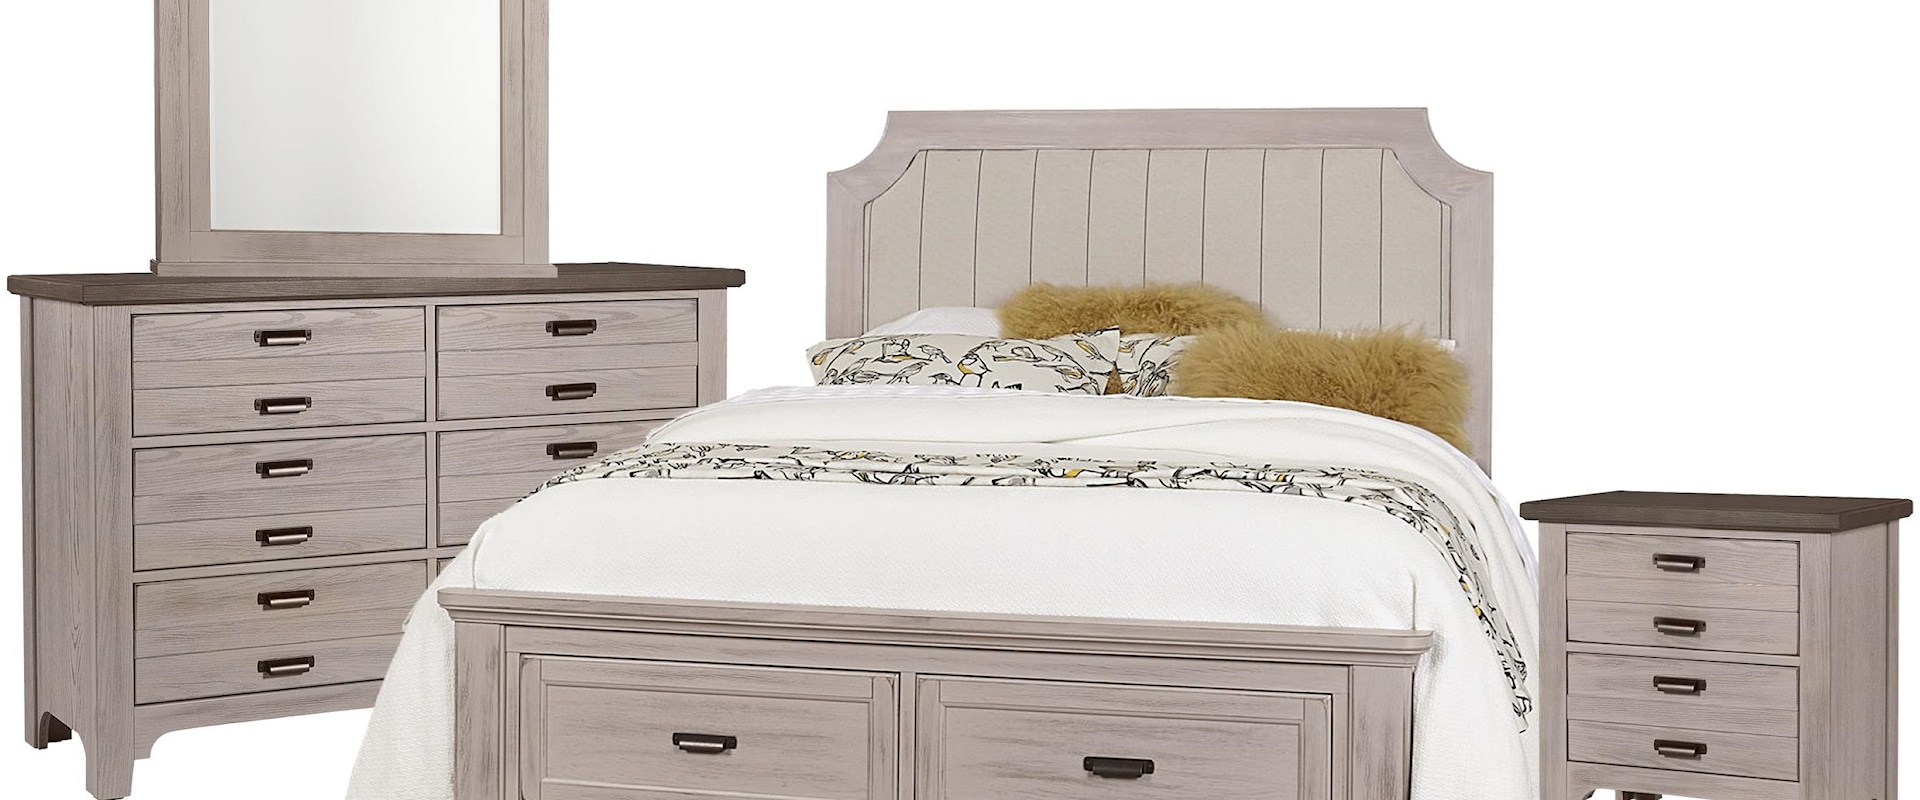 Queen Upholstered Storage Bed, Double Dresser, Arch Mirror, 2 Drawer Nightstand